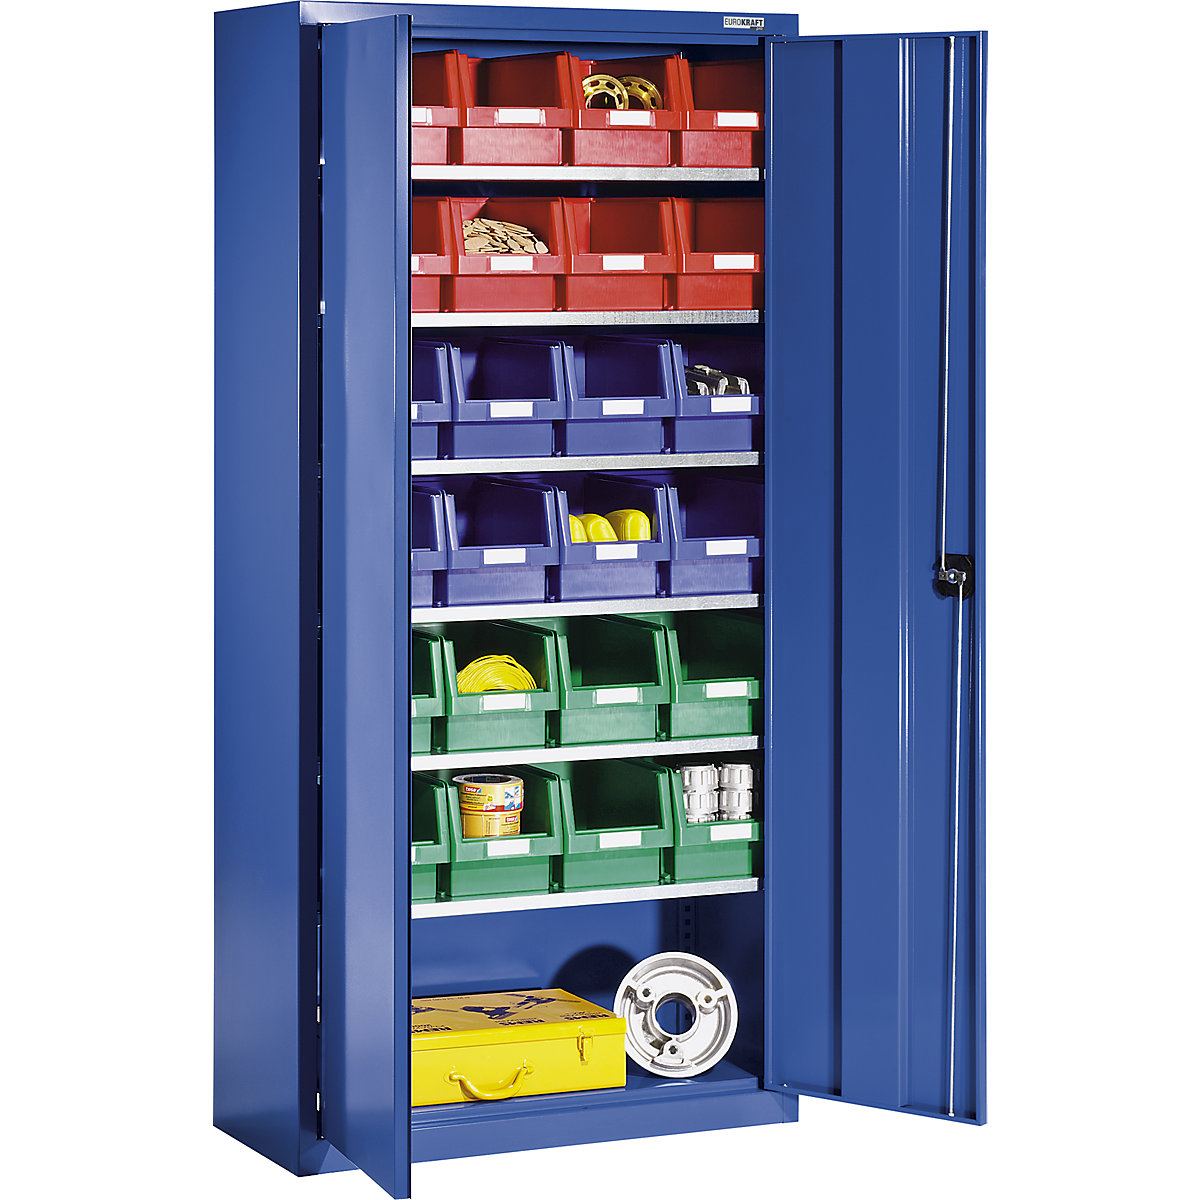 Storage cupboard made of sheet steel – eurokraft pro, with 24 open fronted storage bins, gentian blue RAL 5010-3